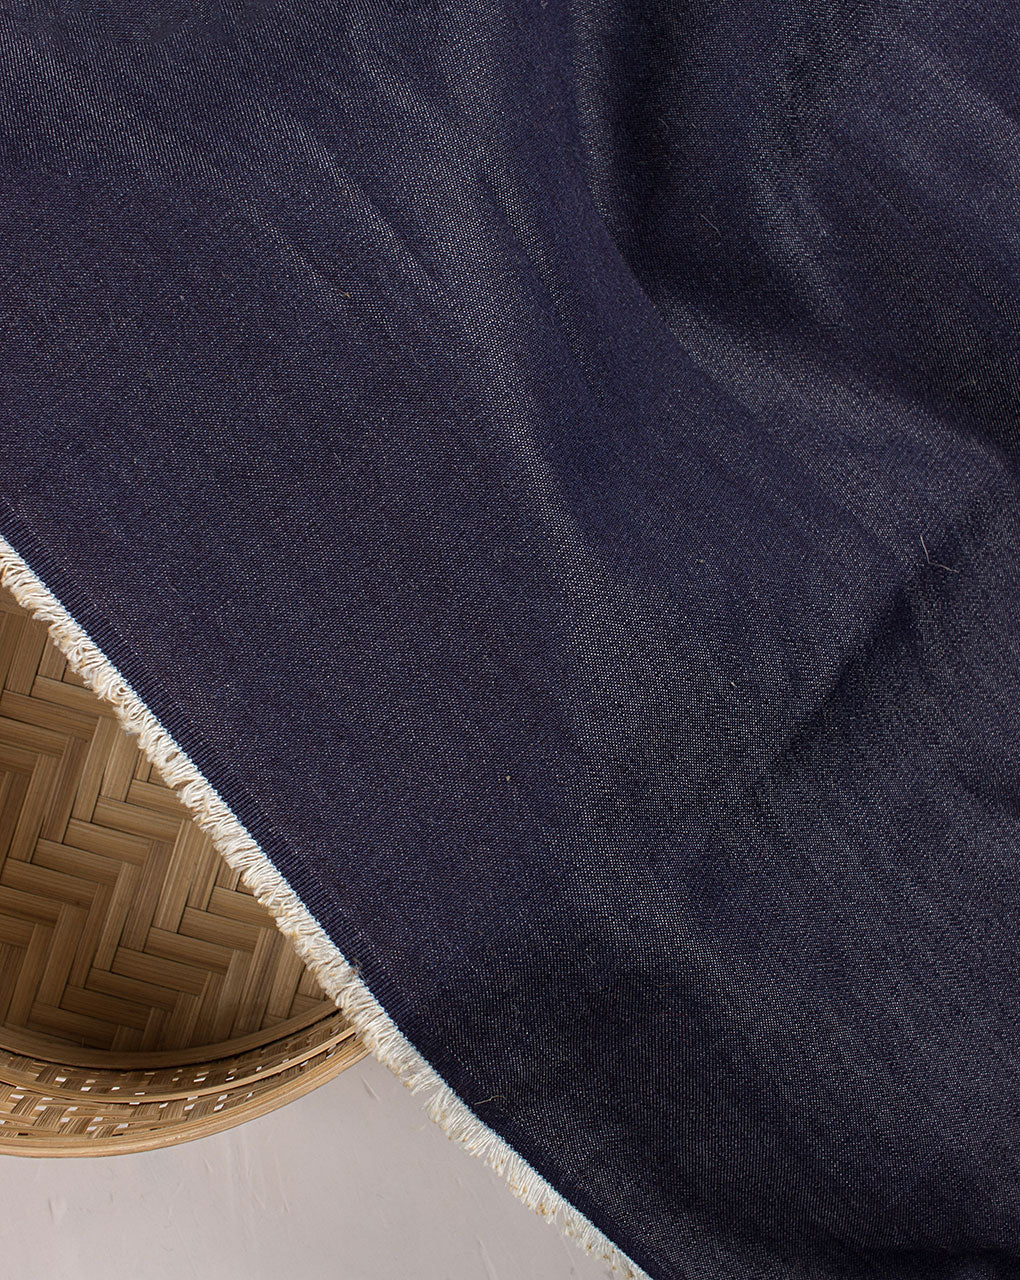 Twill Weave Cotton Denim Fabric (Width 64 Inch) - Fabriclore.com